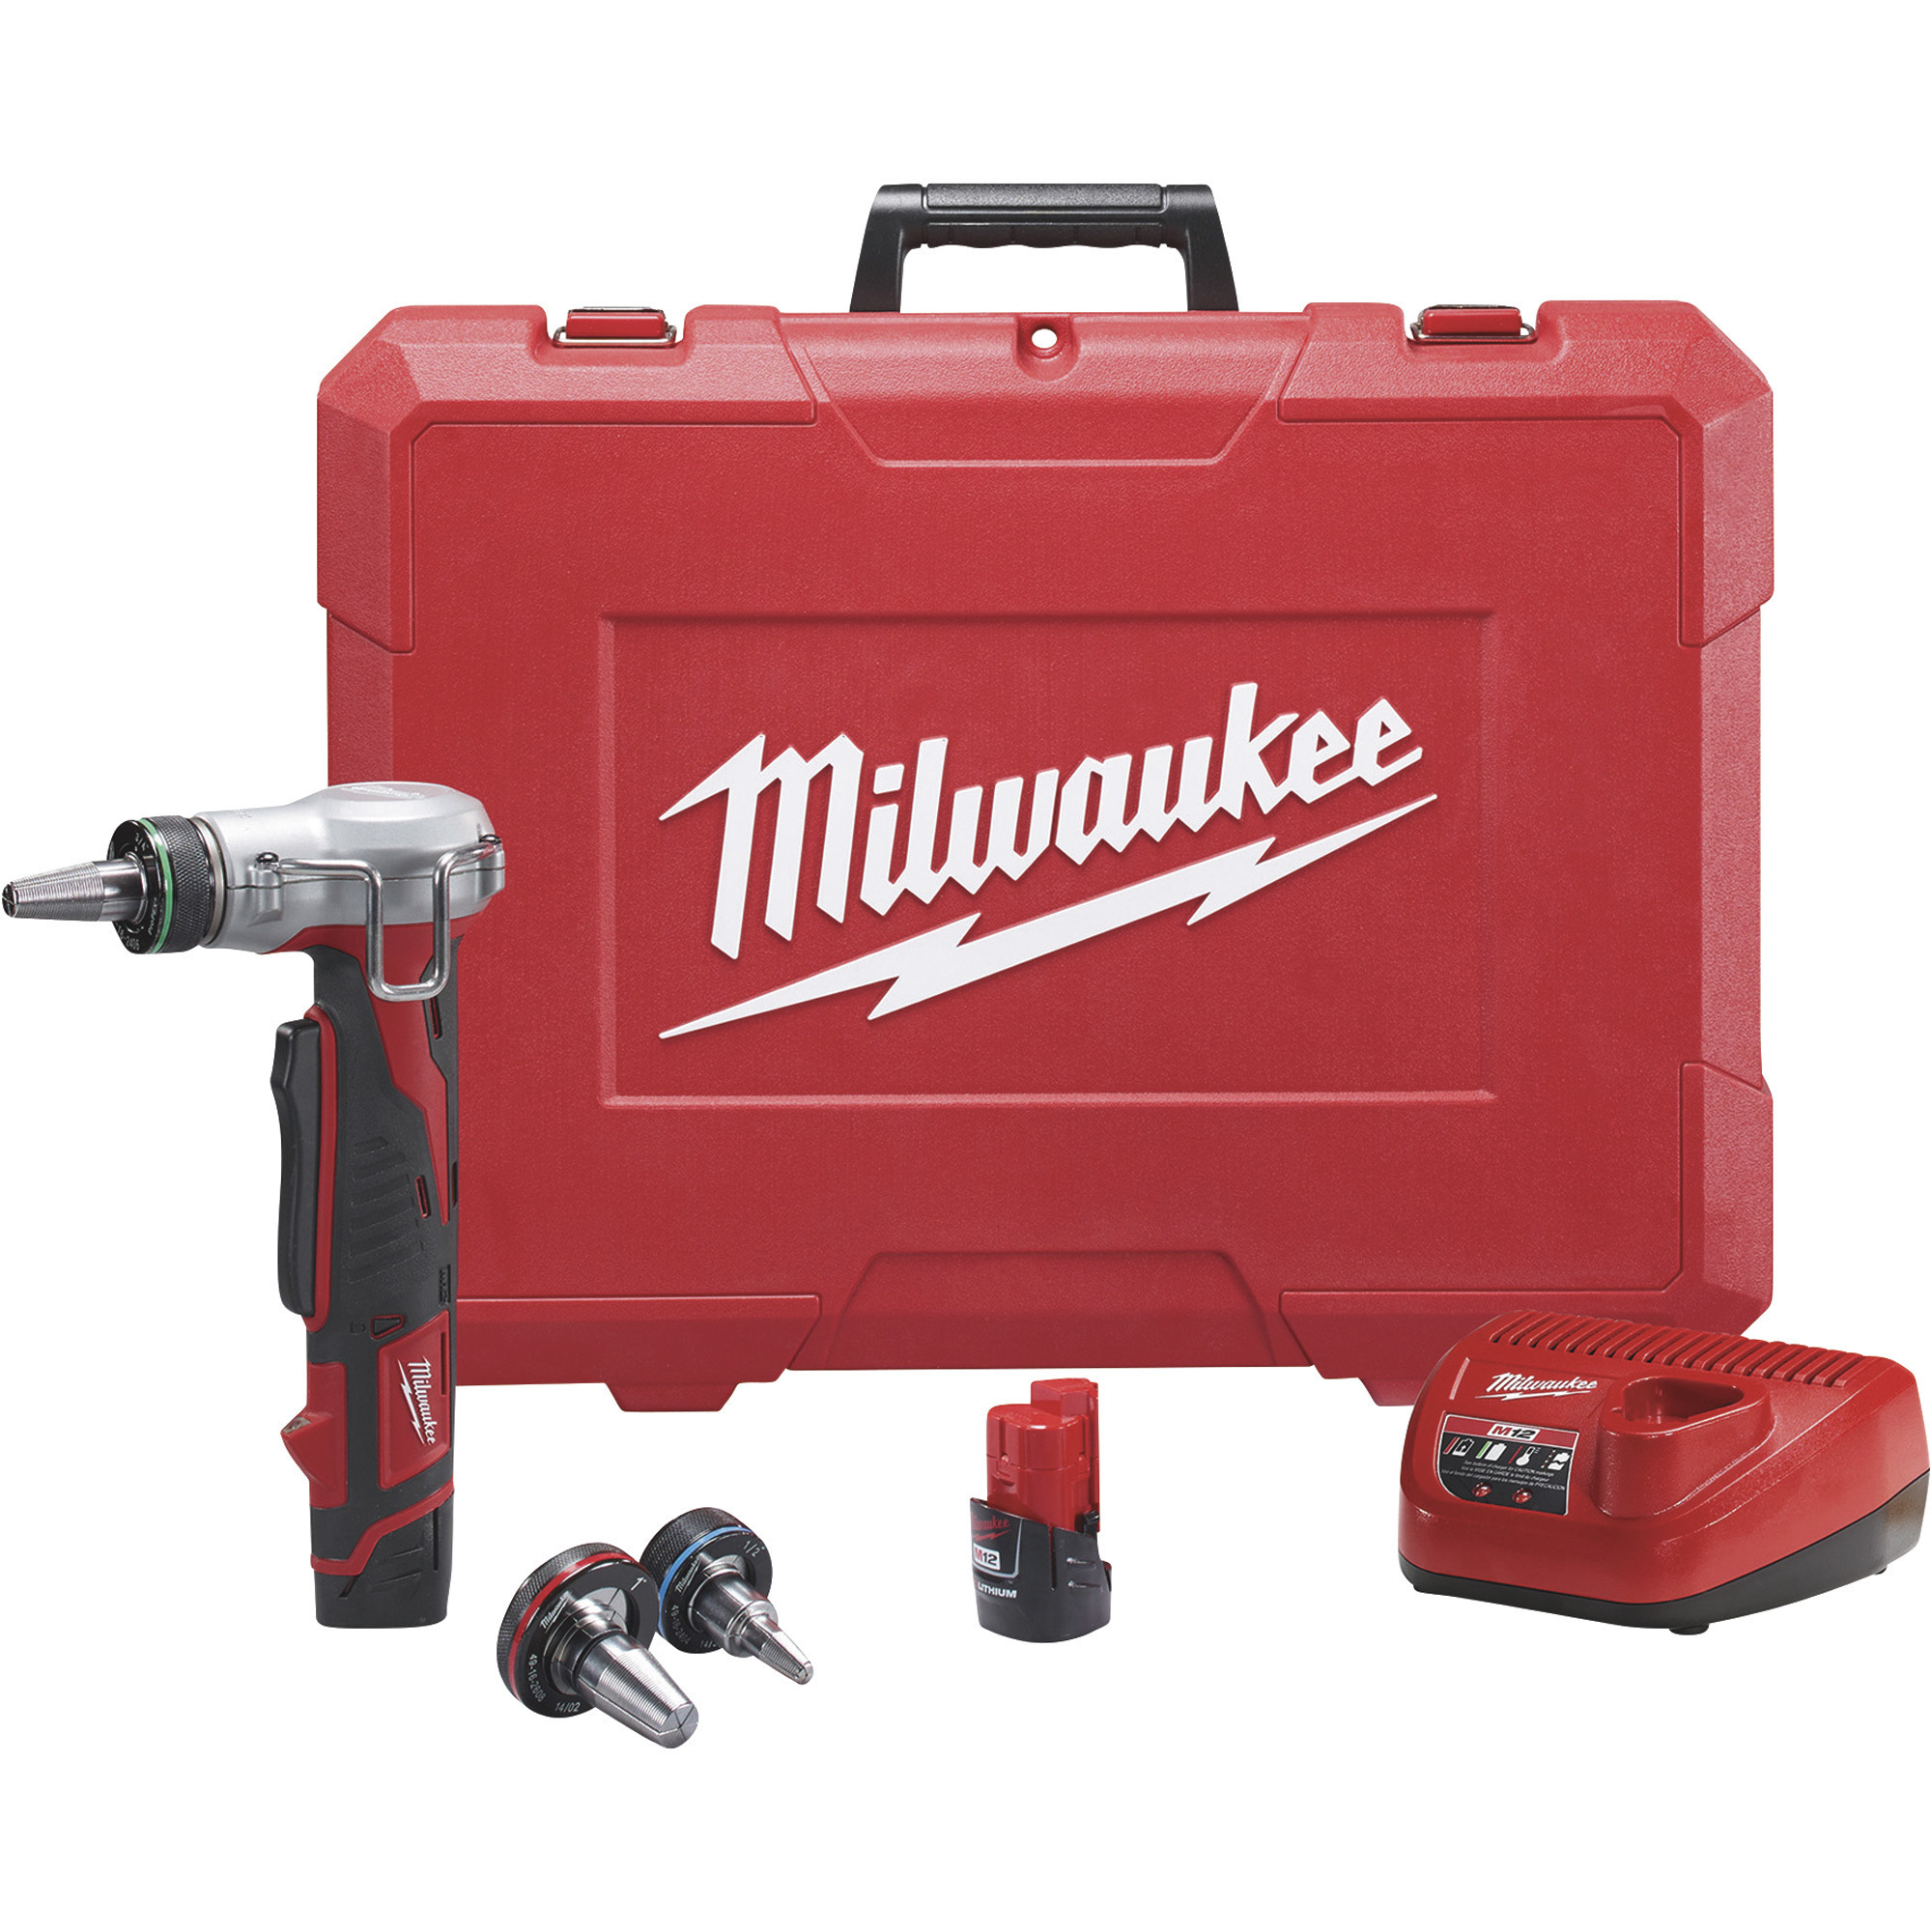 Milwaukee M12 ProPEX Expander Kit, 2 Batteries, Model 2432-22